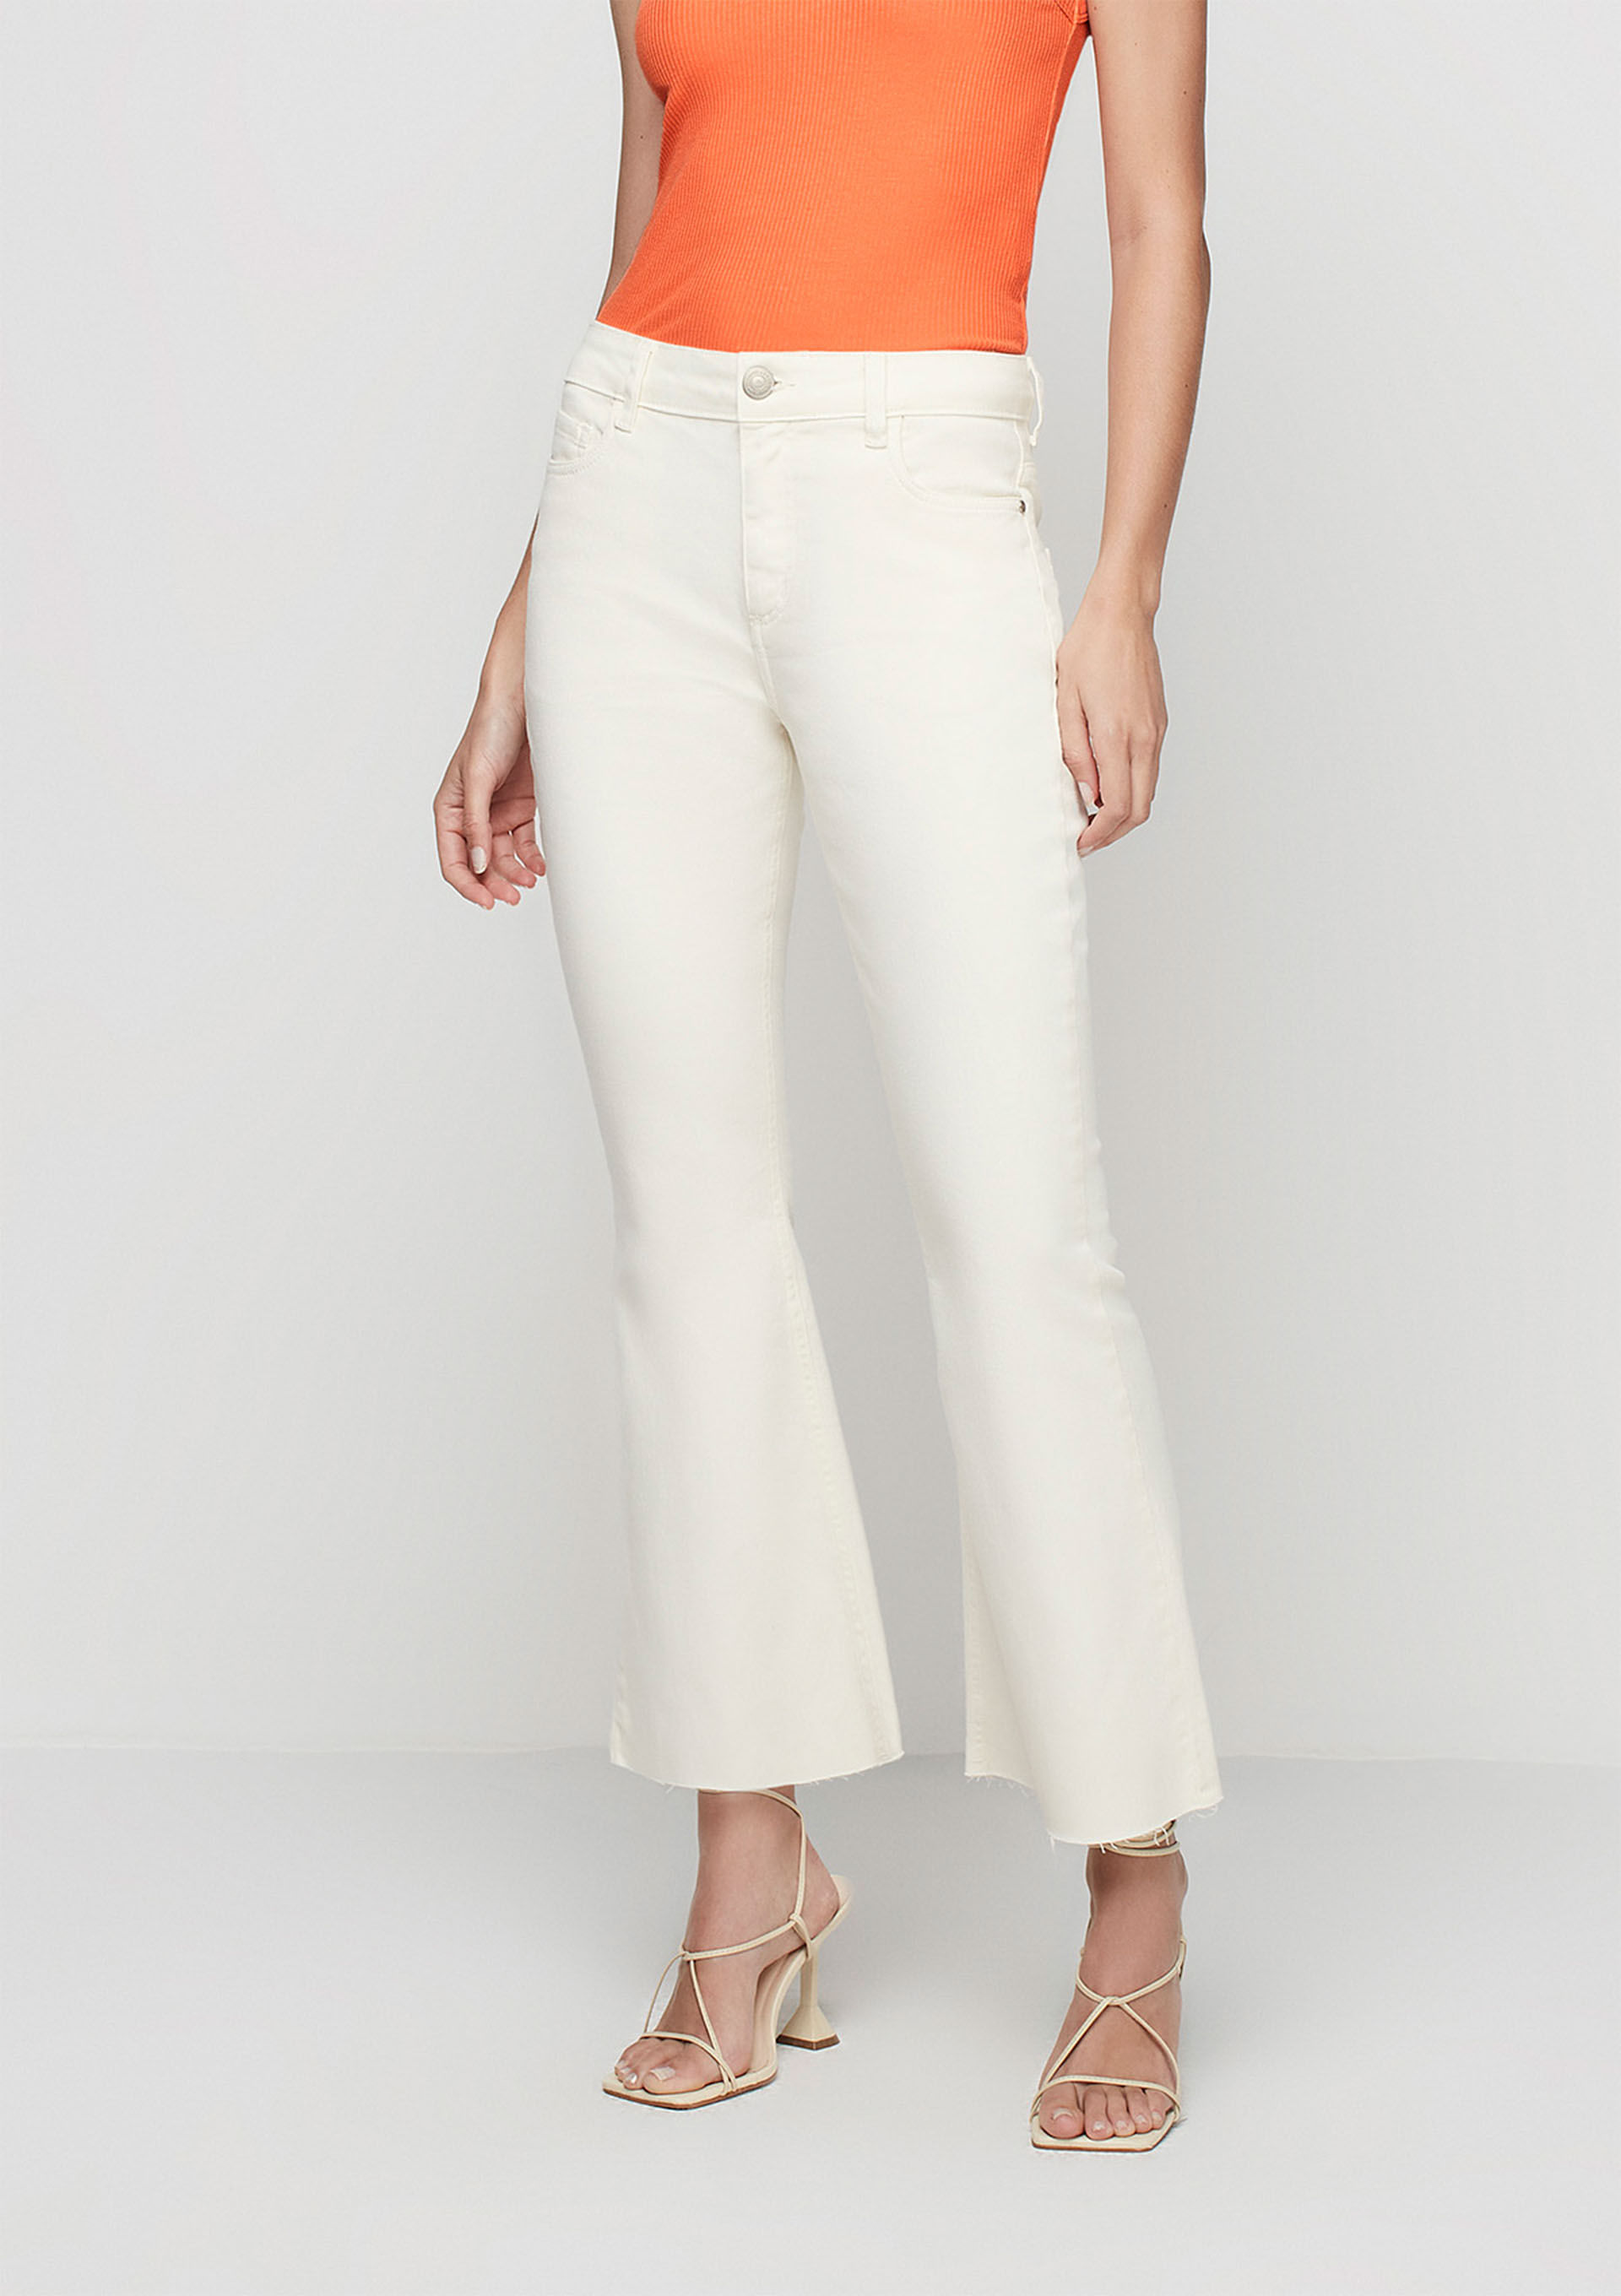 Calça Flare White Jeans - Off White - Zinzane